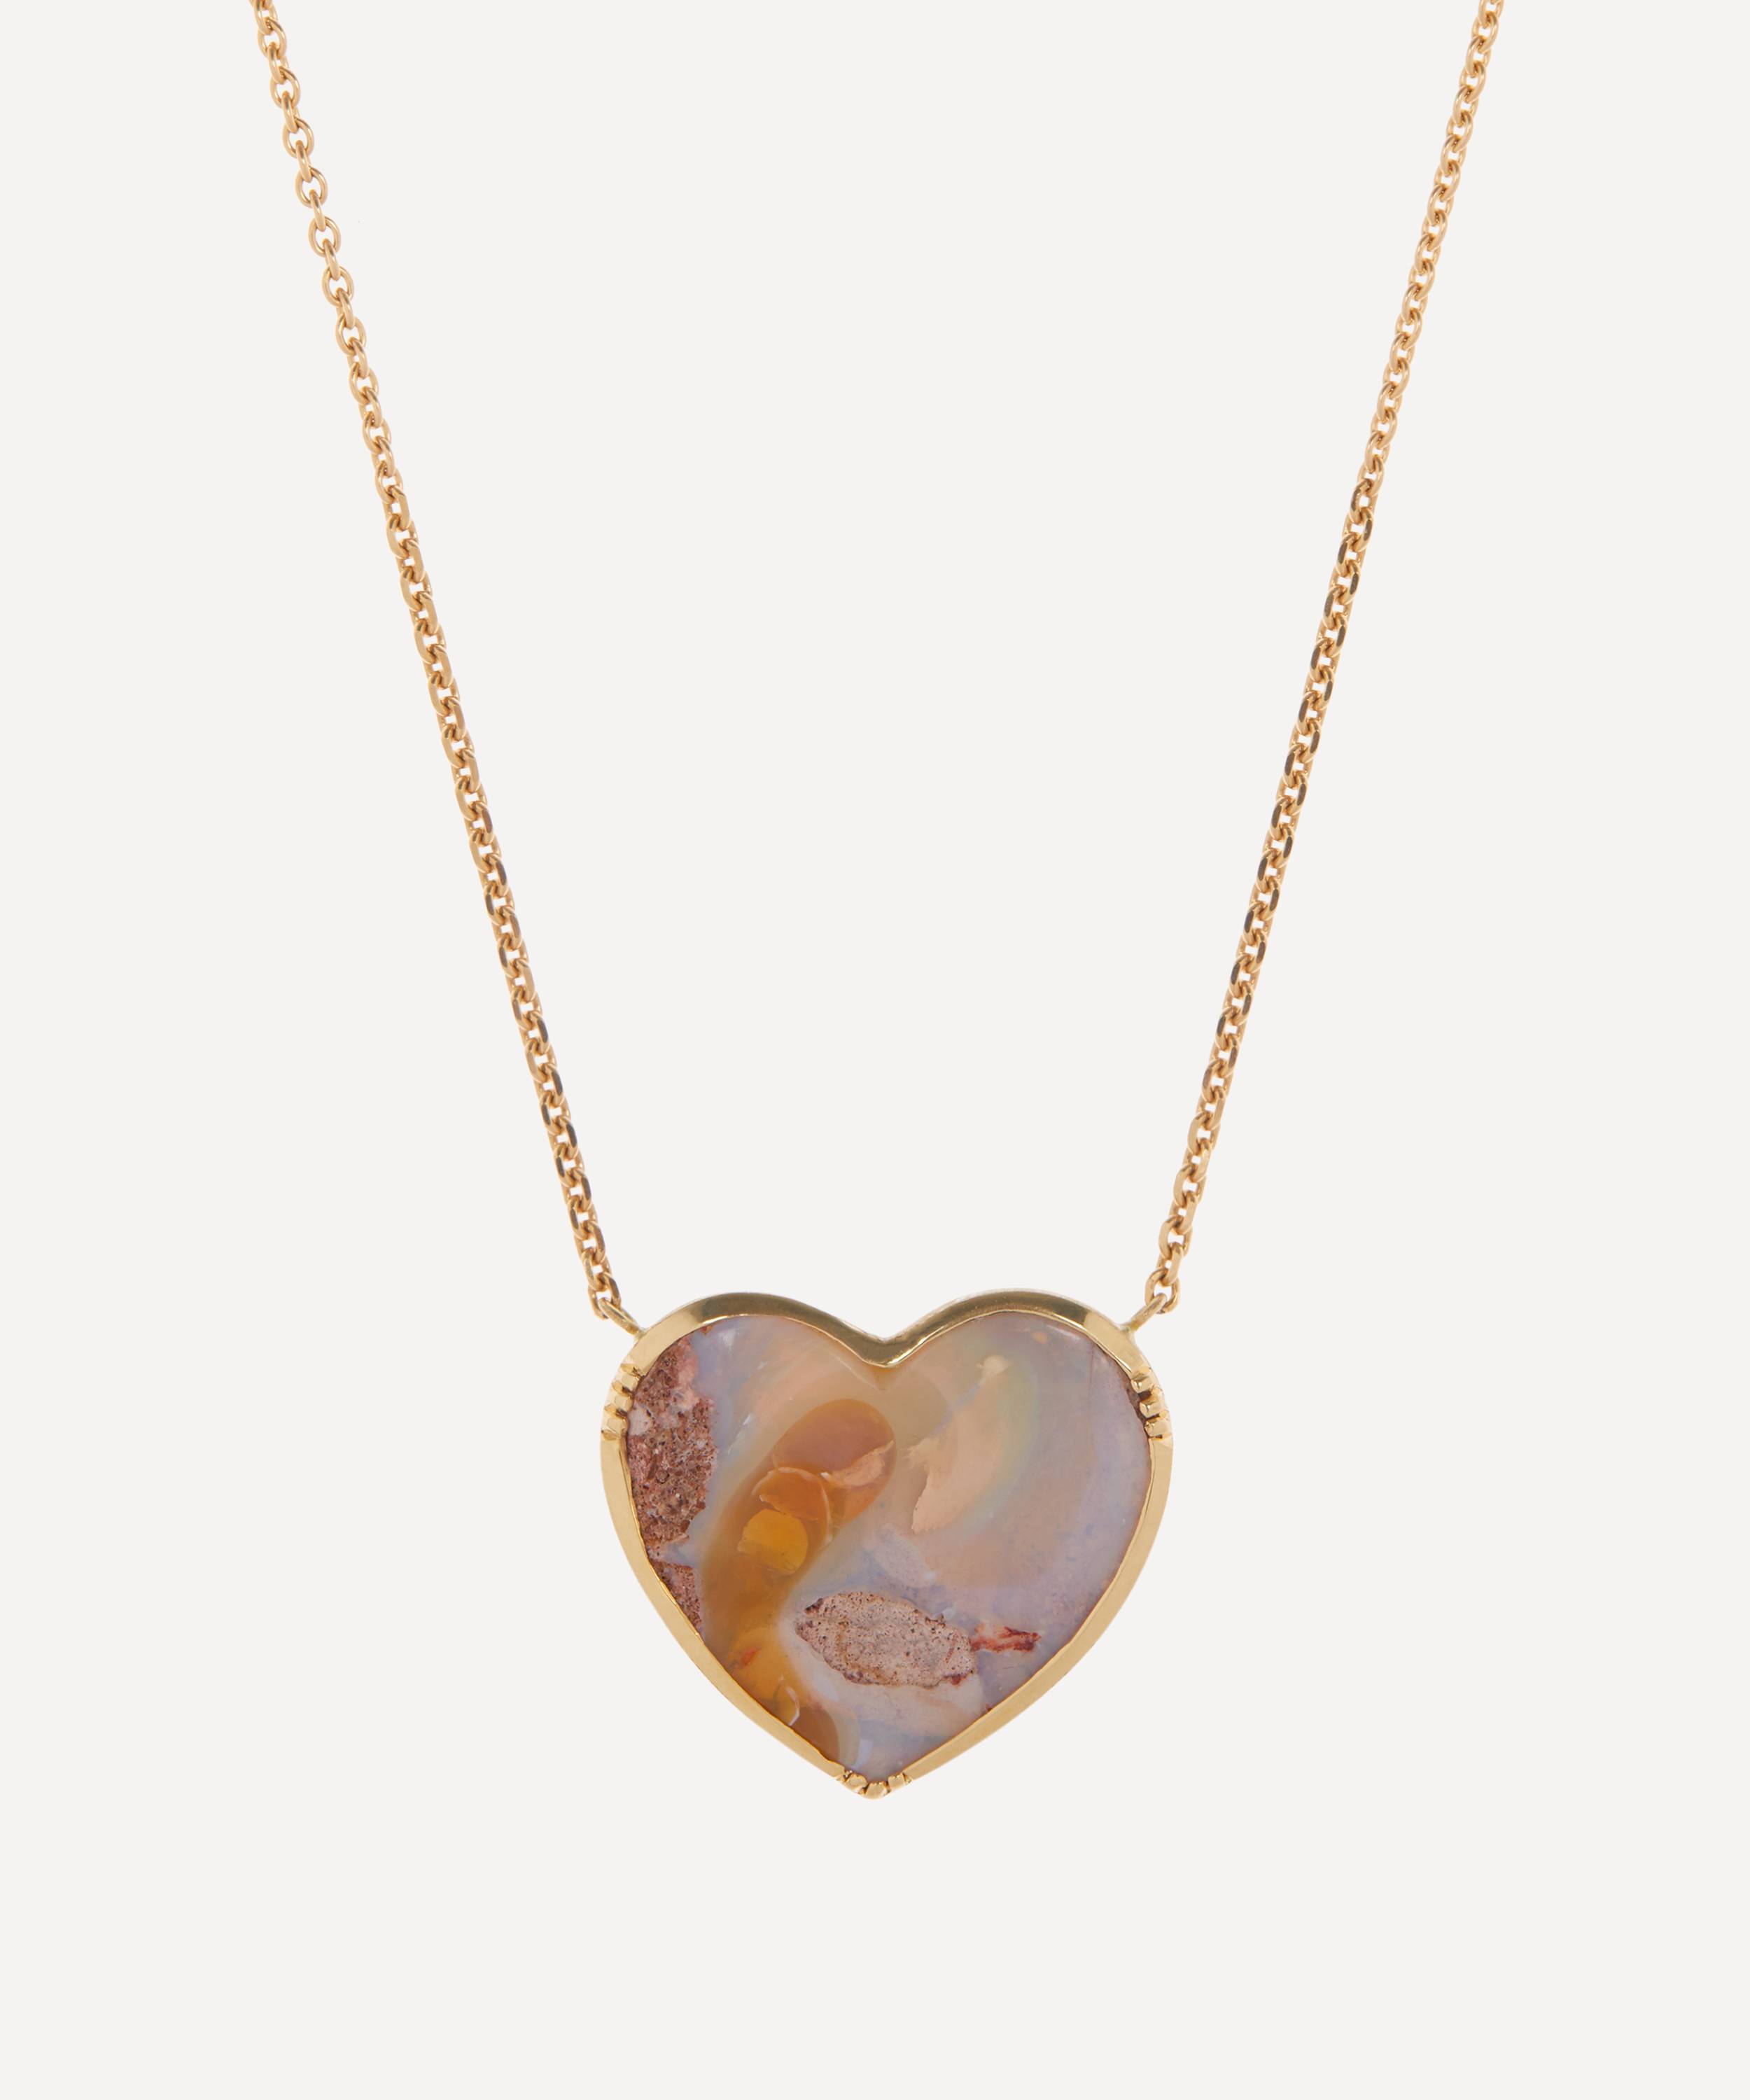 Brooke Gregson Heart Pendant Necklace